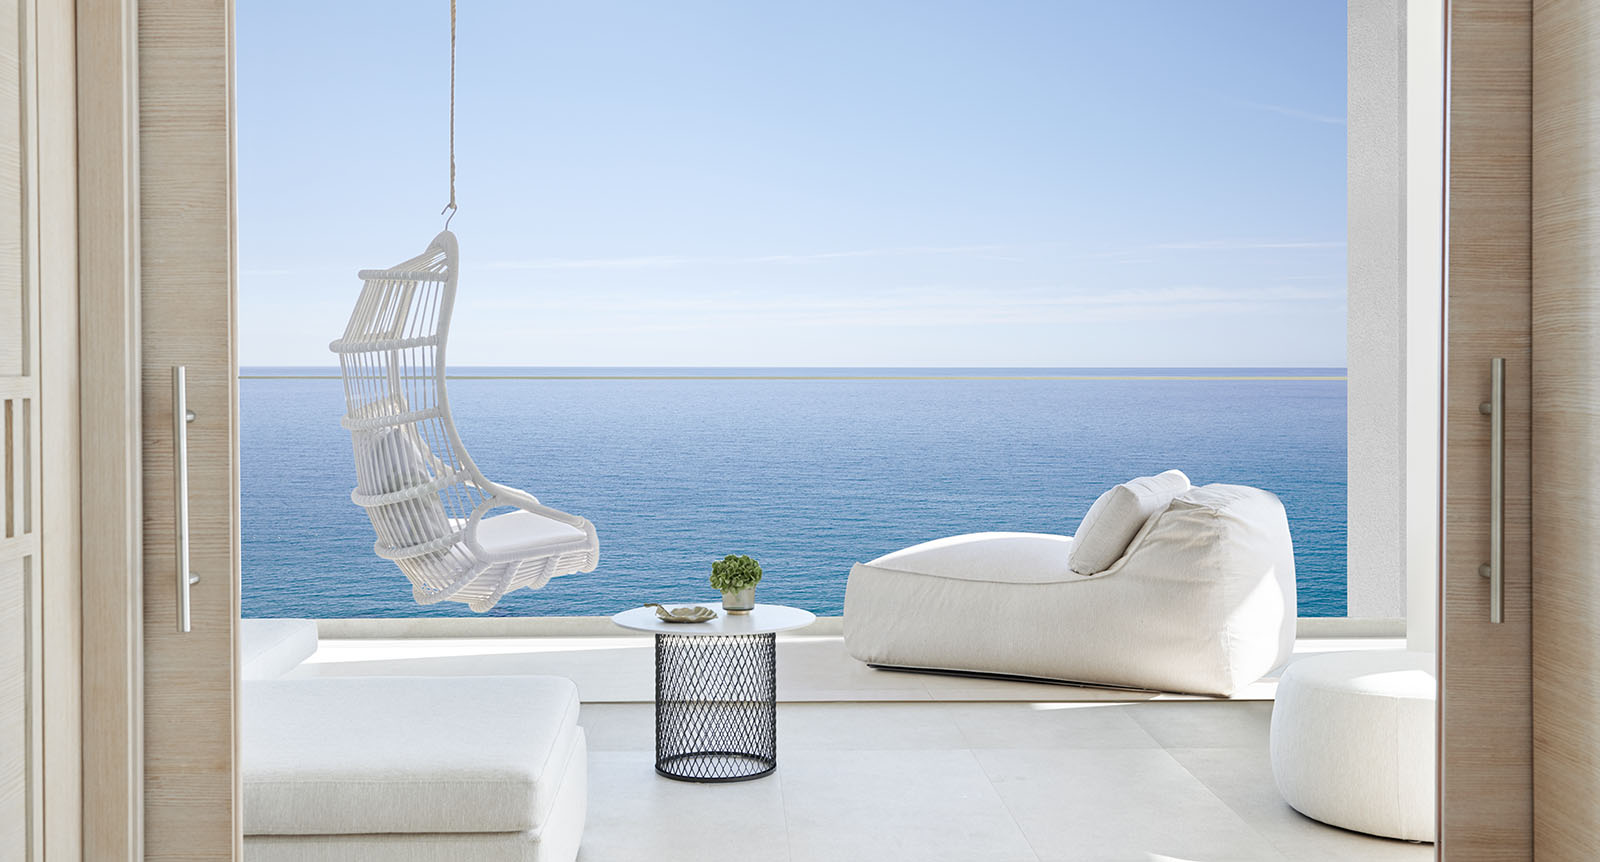 6 of the best luxury beach hotels in the Mediterranean